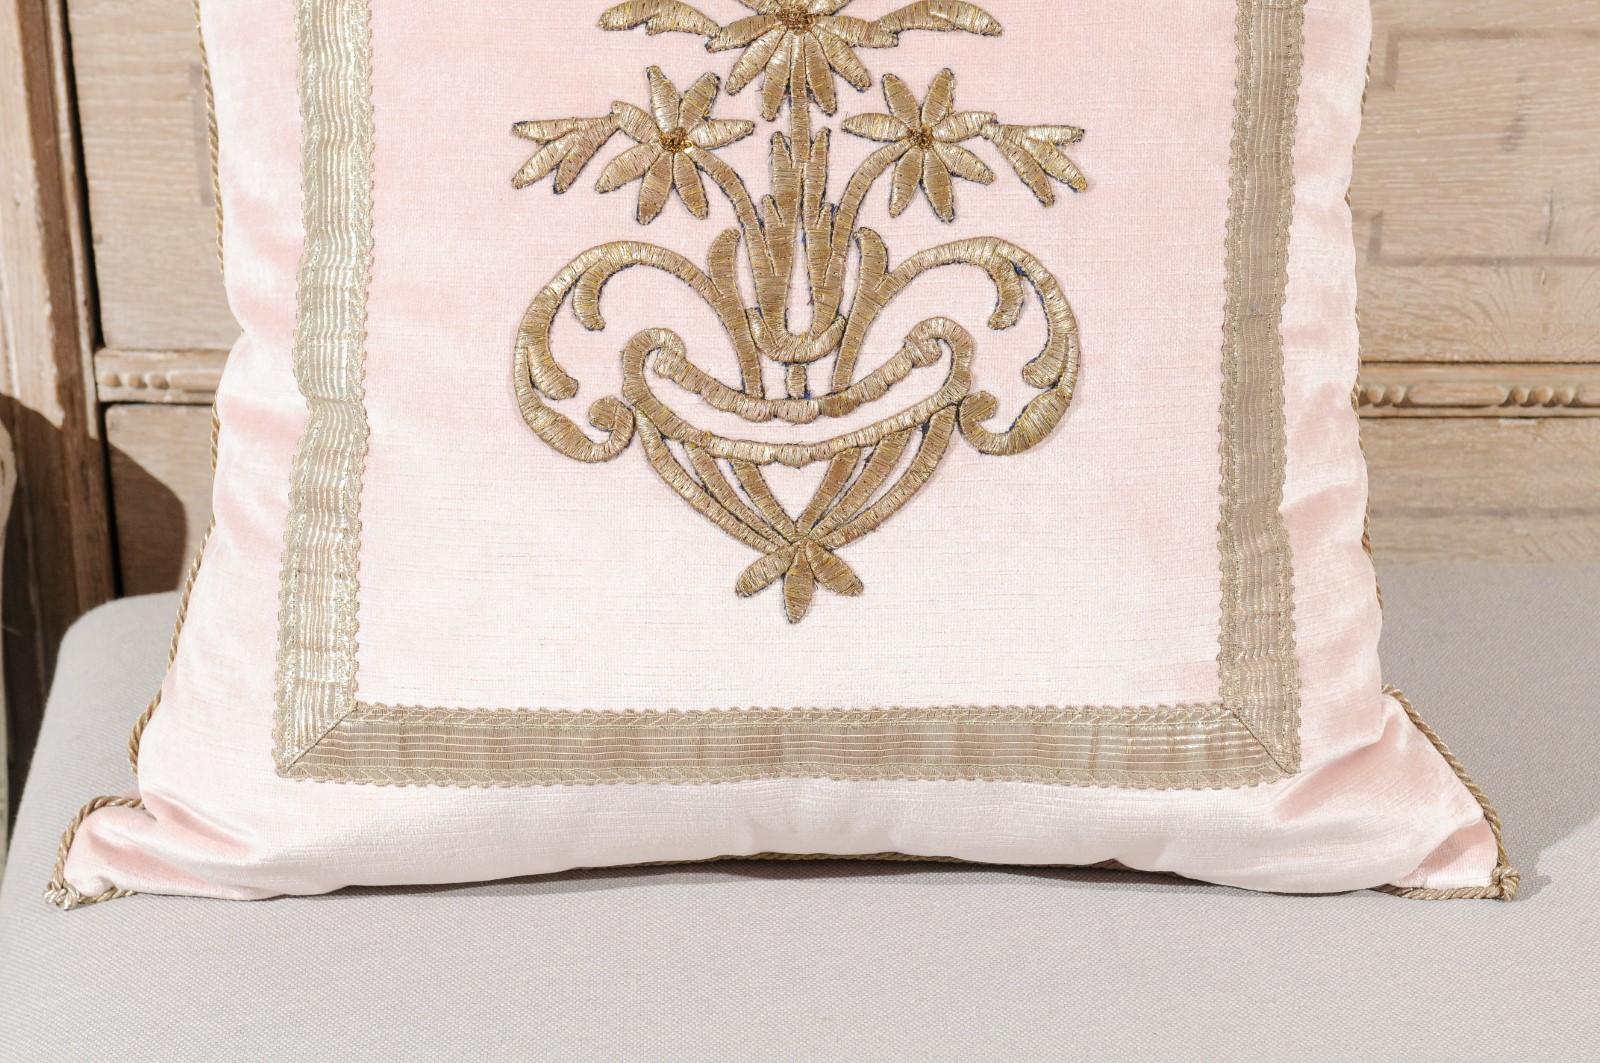 Antique Ottoman Empire Silver Metallic Embroidery on Blush Pink Velvet Pillow 4